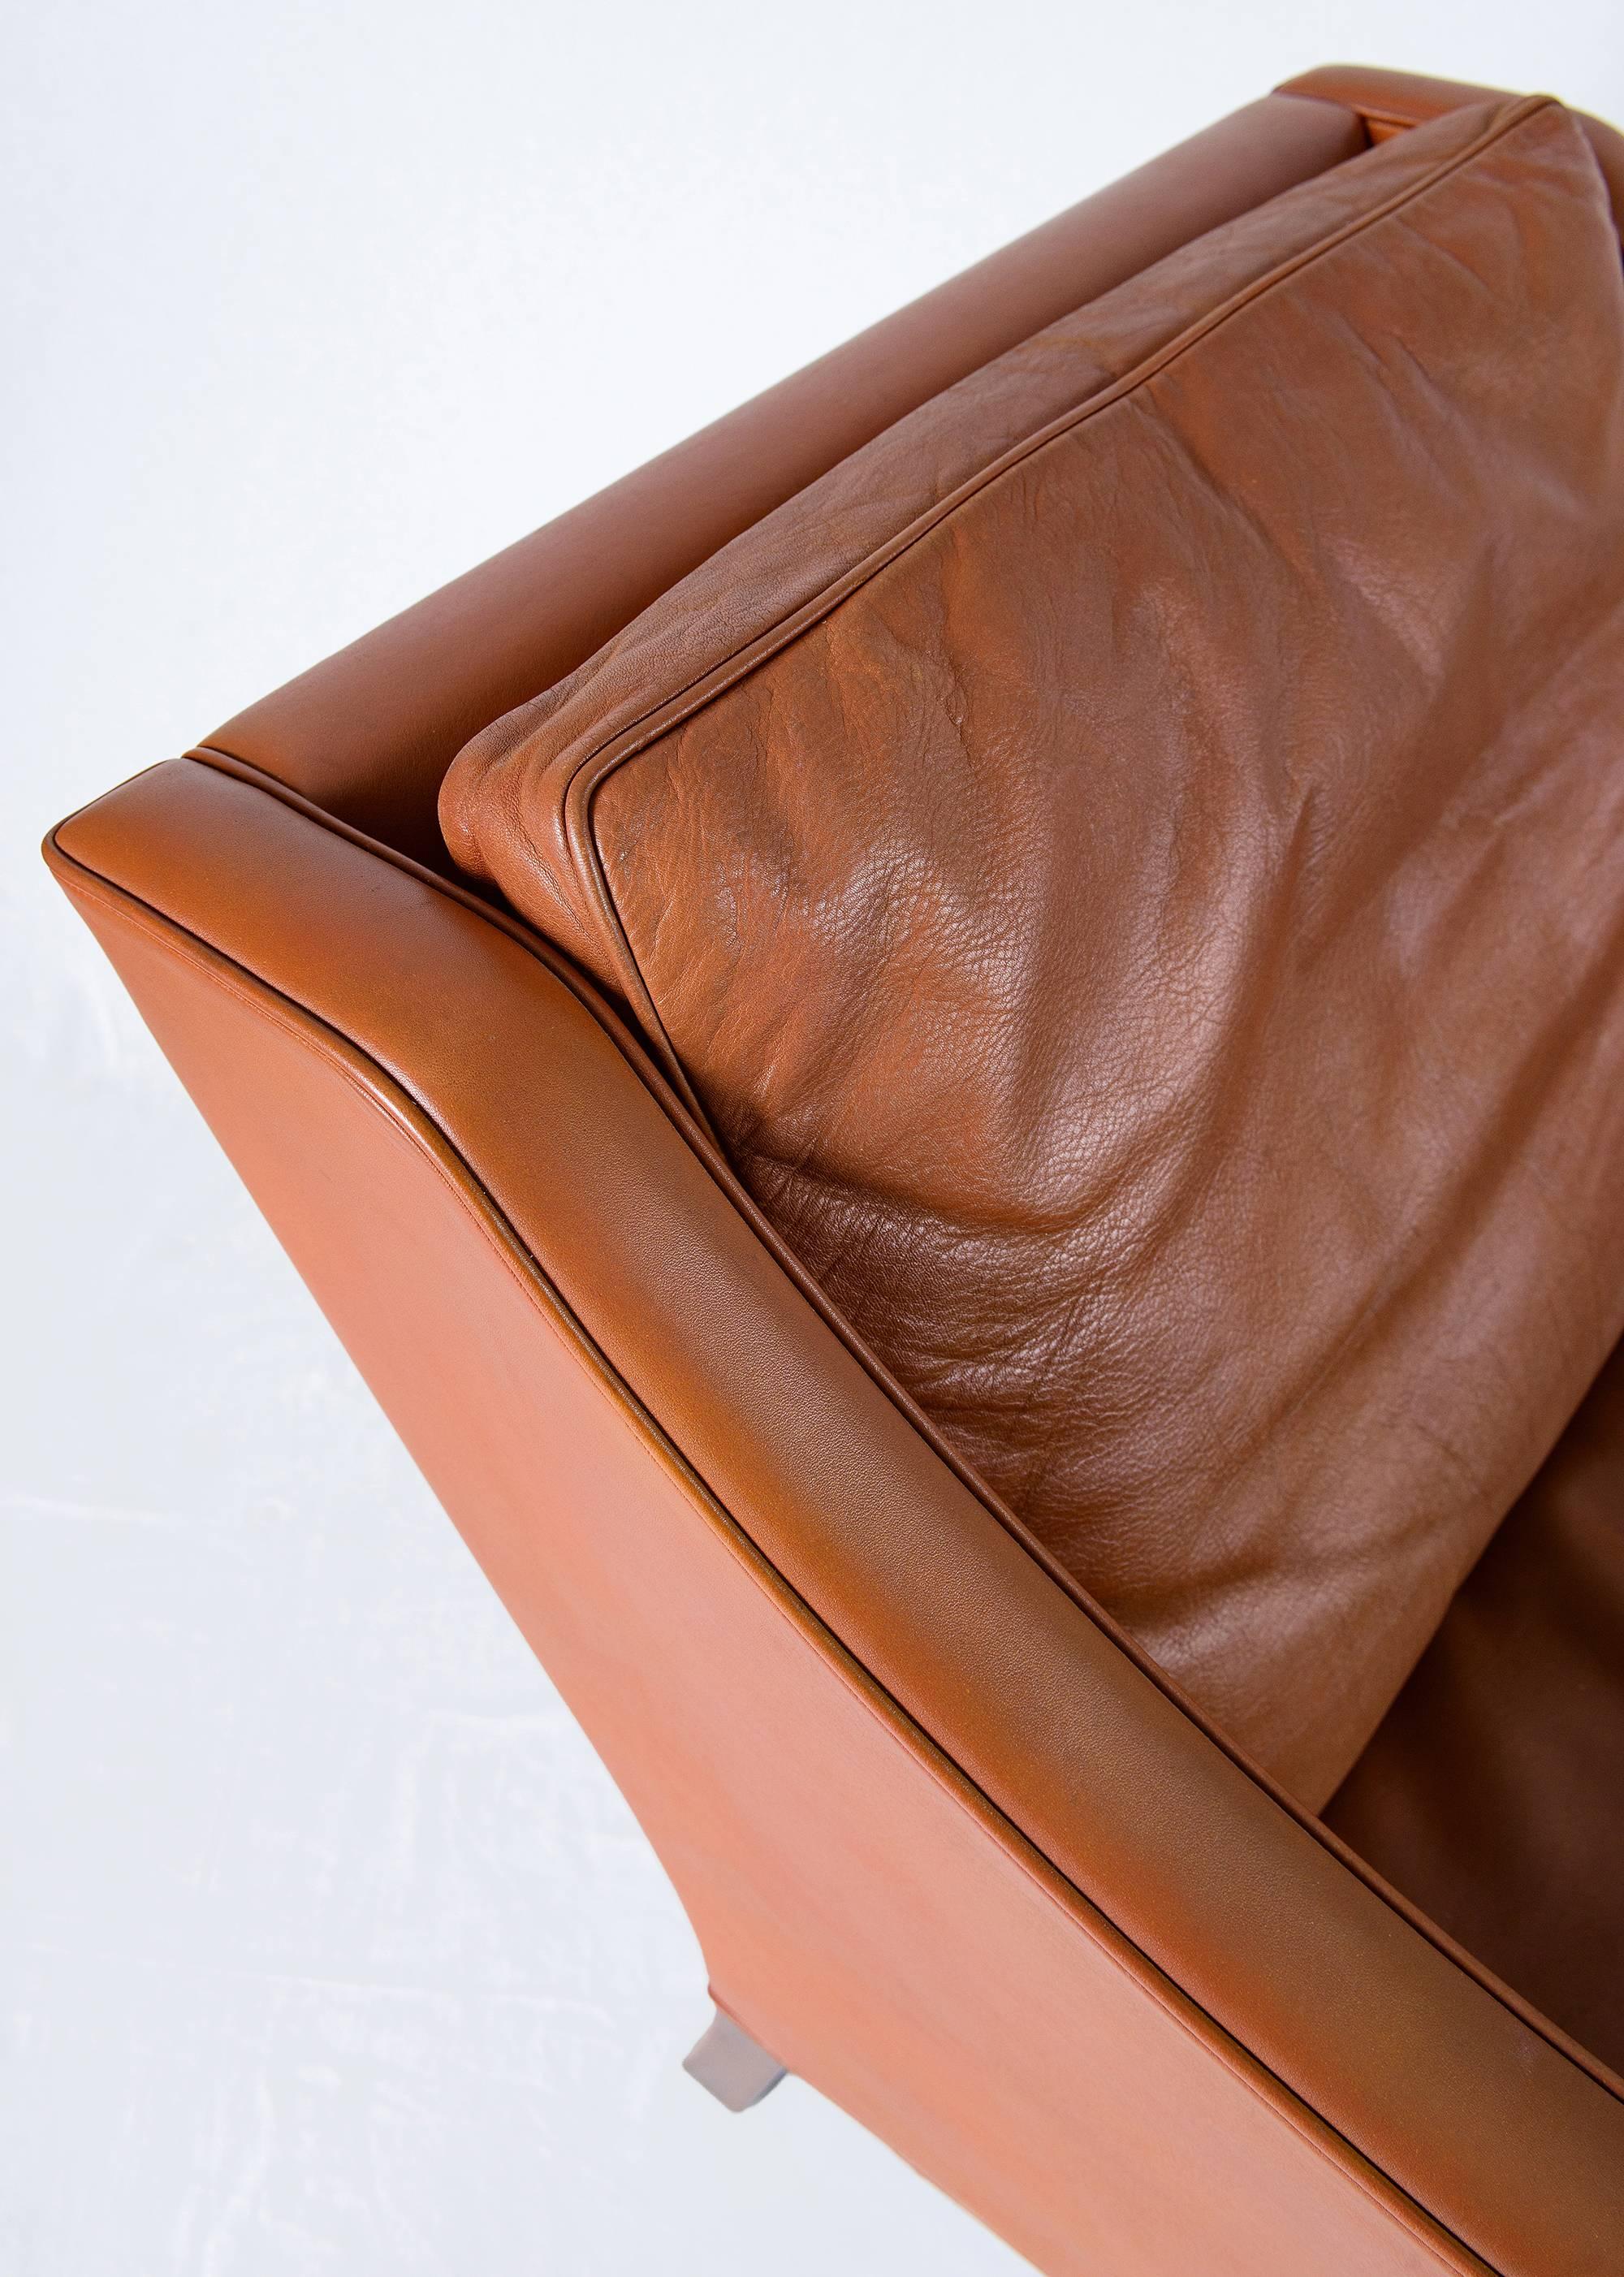 Børge Mogensen Model #2207 Leather Lounge Chair 3